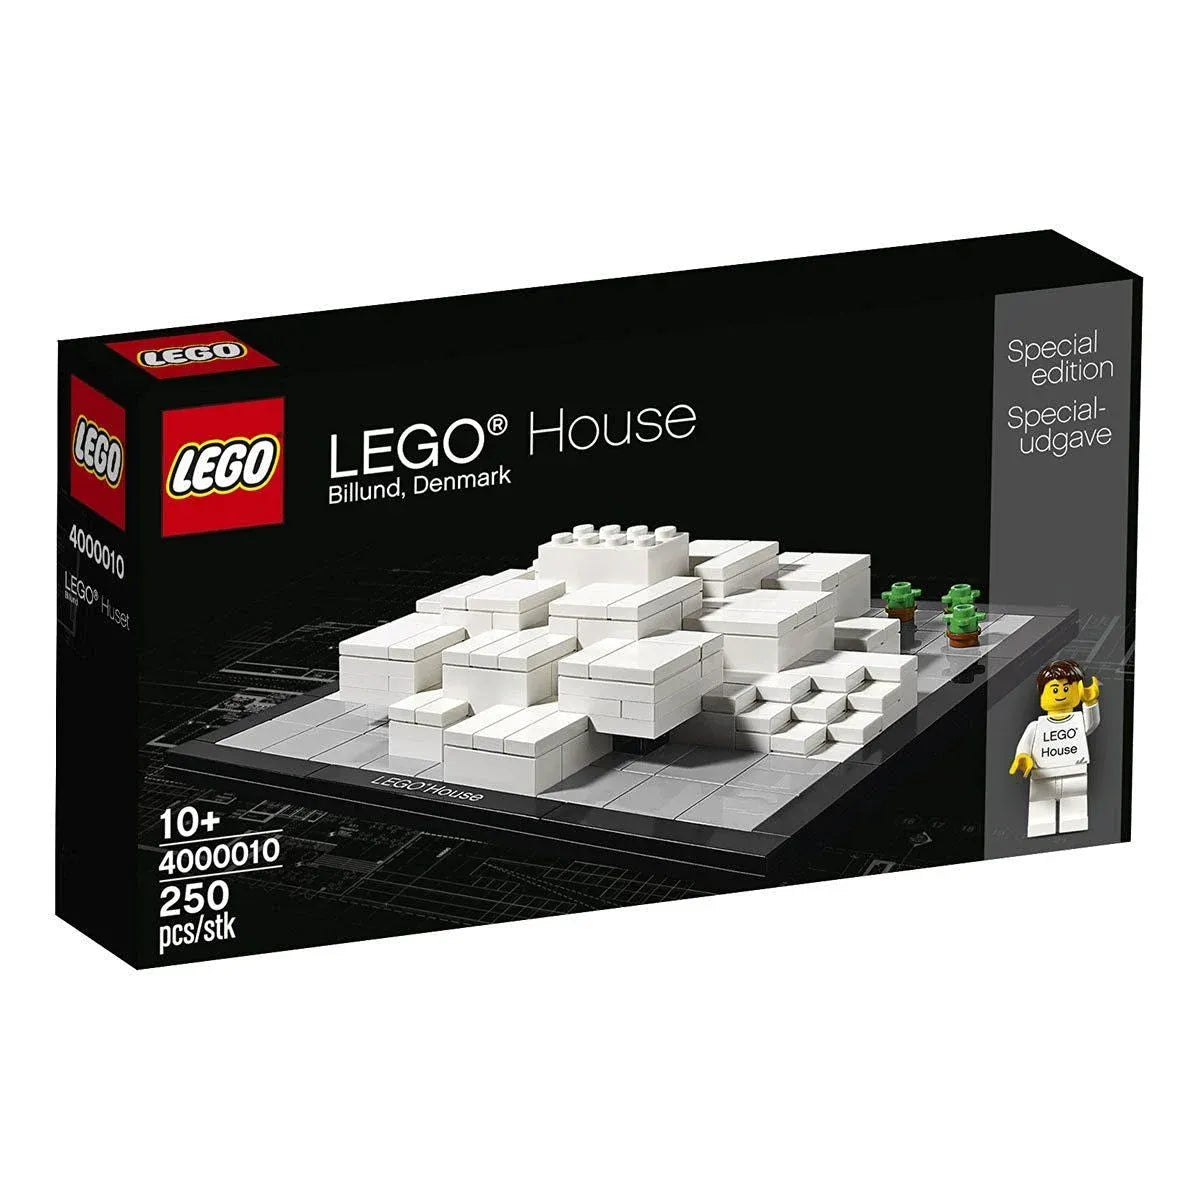 LEGO Exclusive LEGO House